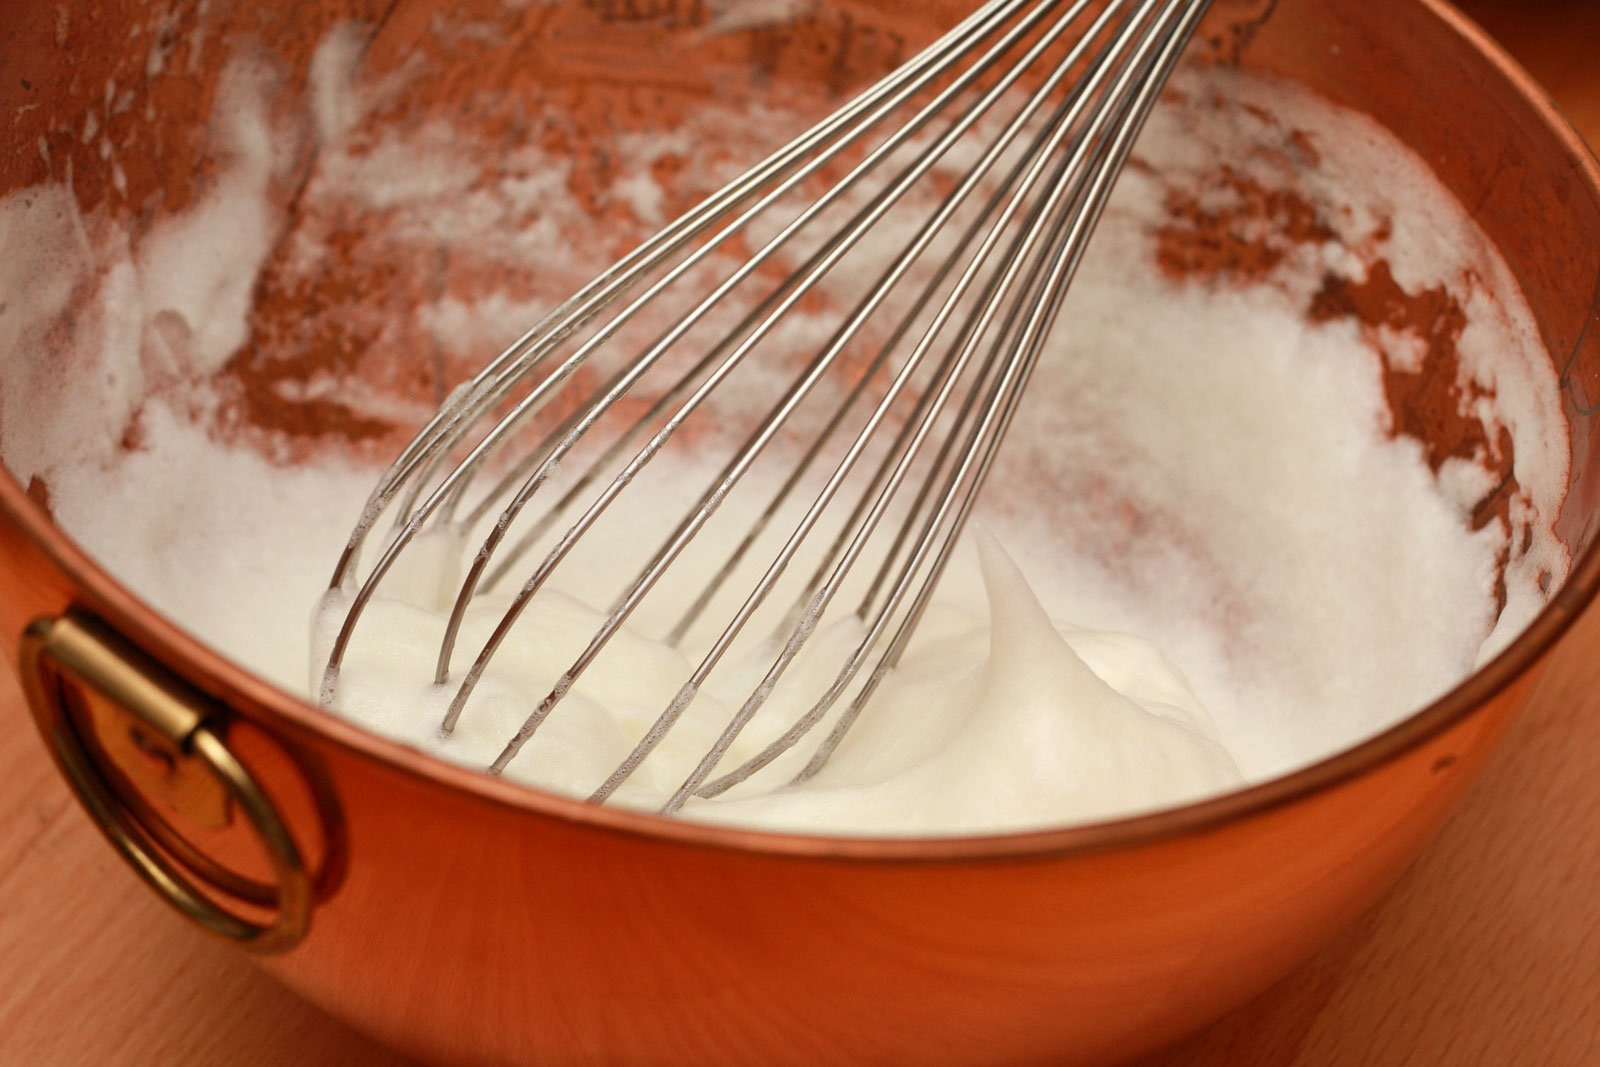 whisking egg whites in a copper bowl - stiff peaks